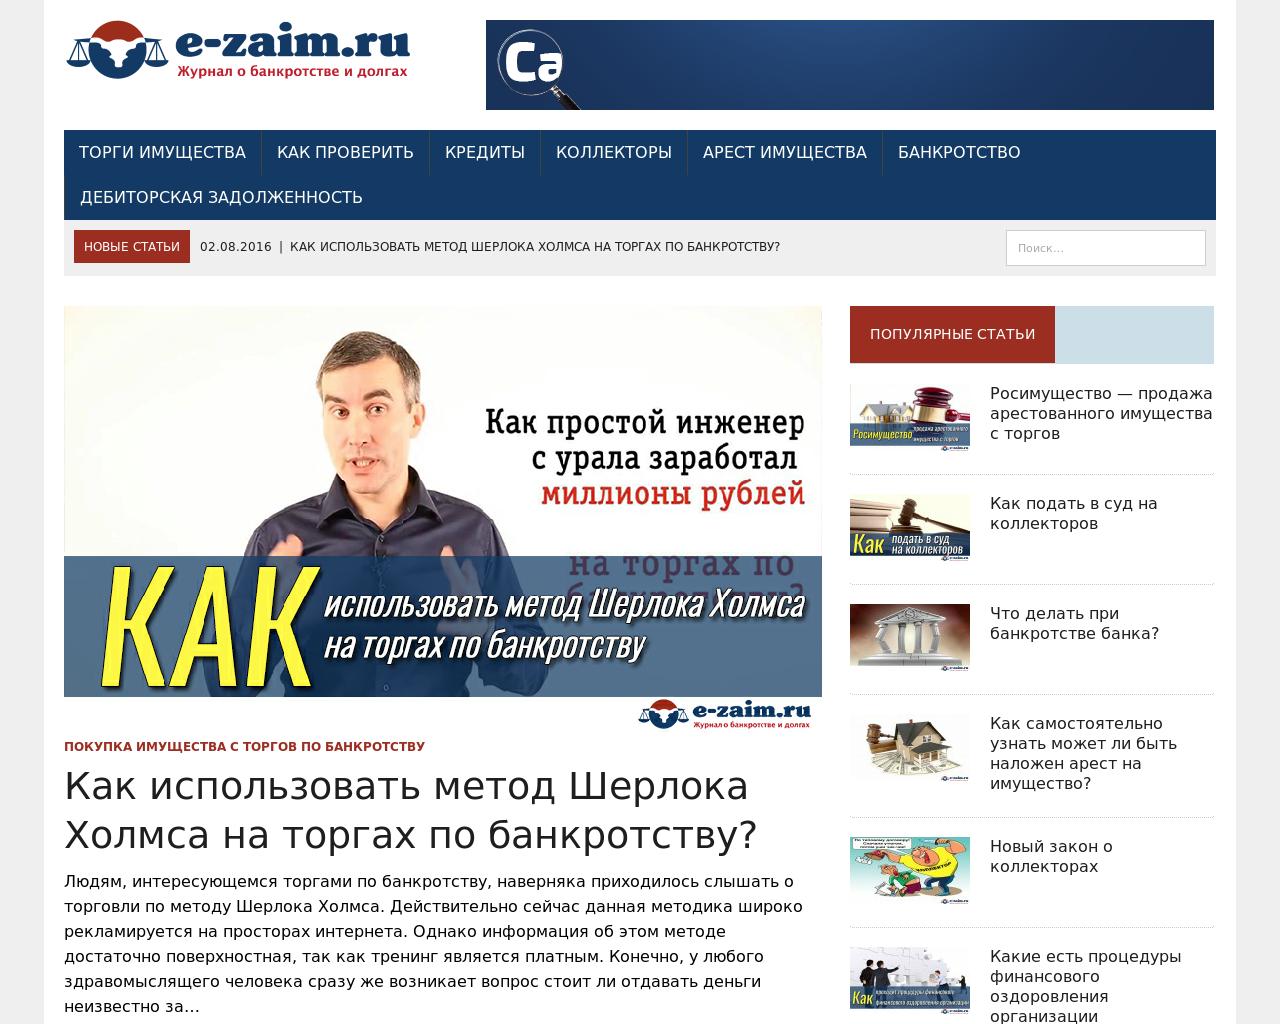 Изображение сайта e-zaim.ru в разрешении 1280x1024